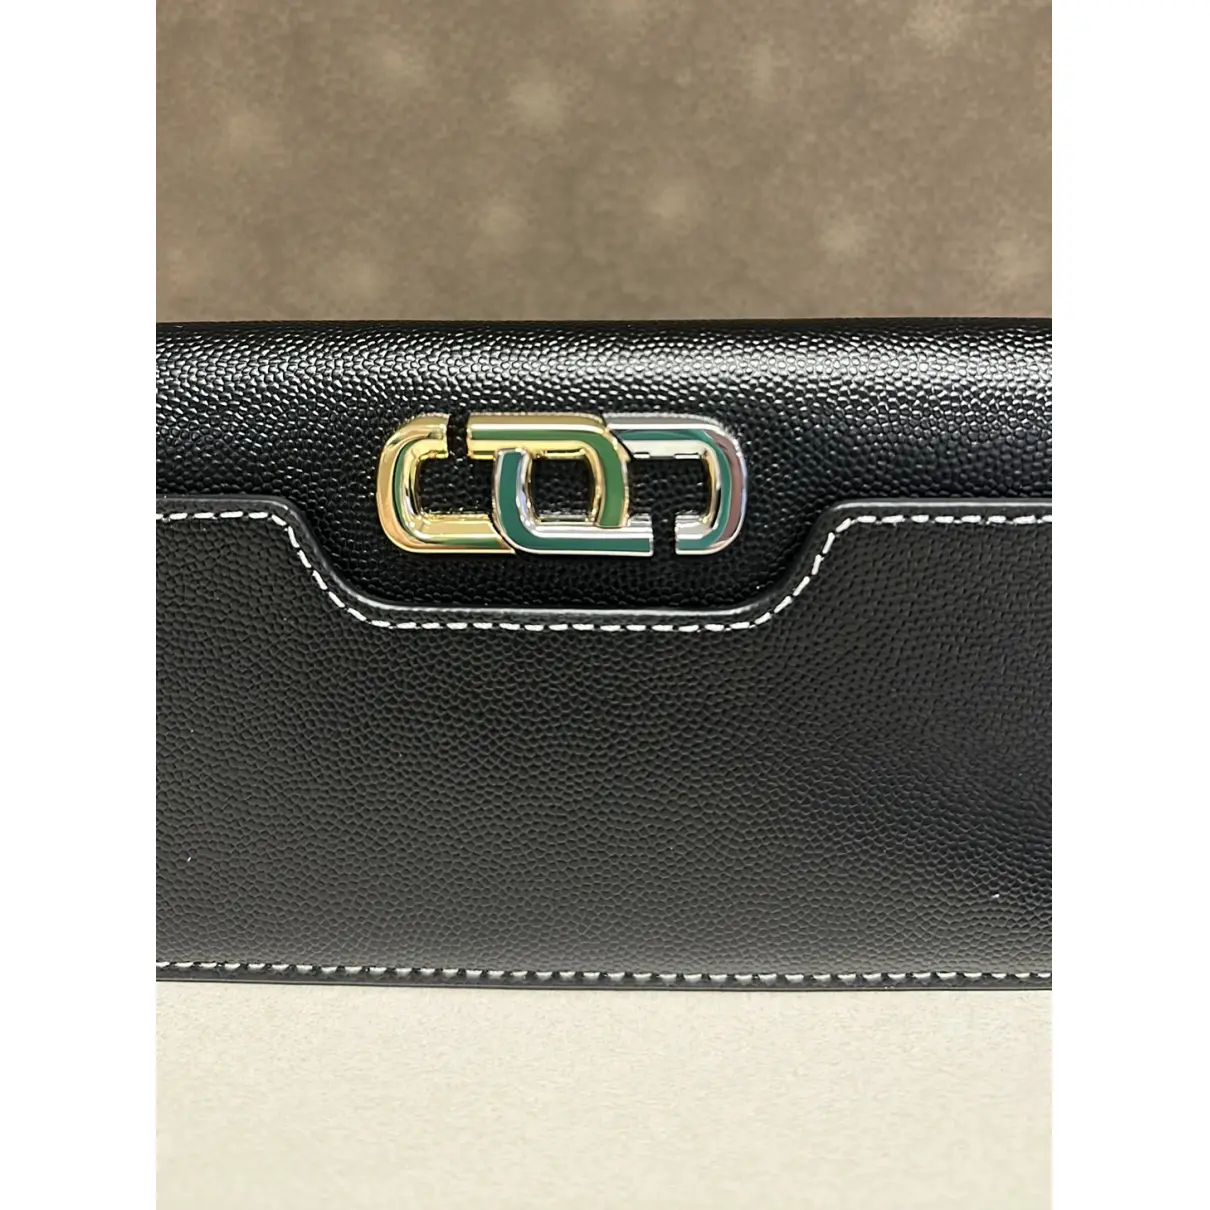 Buy Marc Jacobs Snapshot leather wallet online